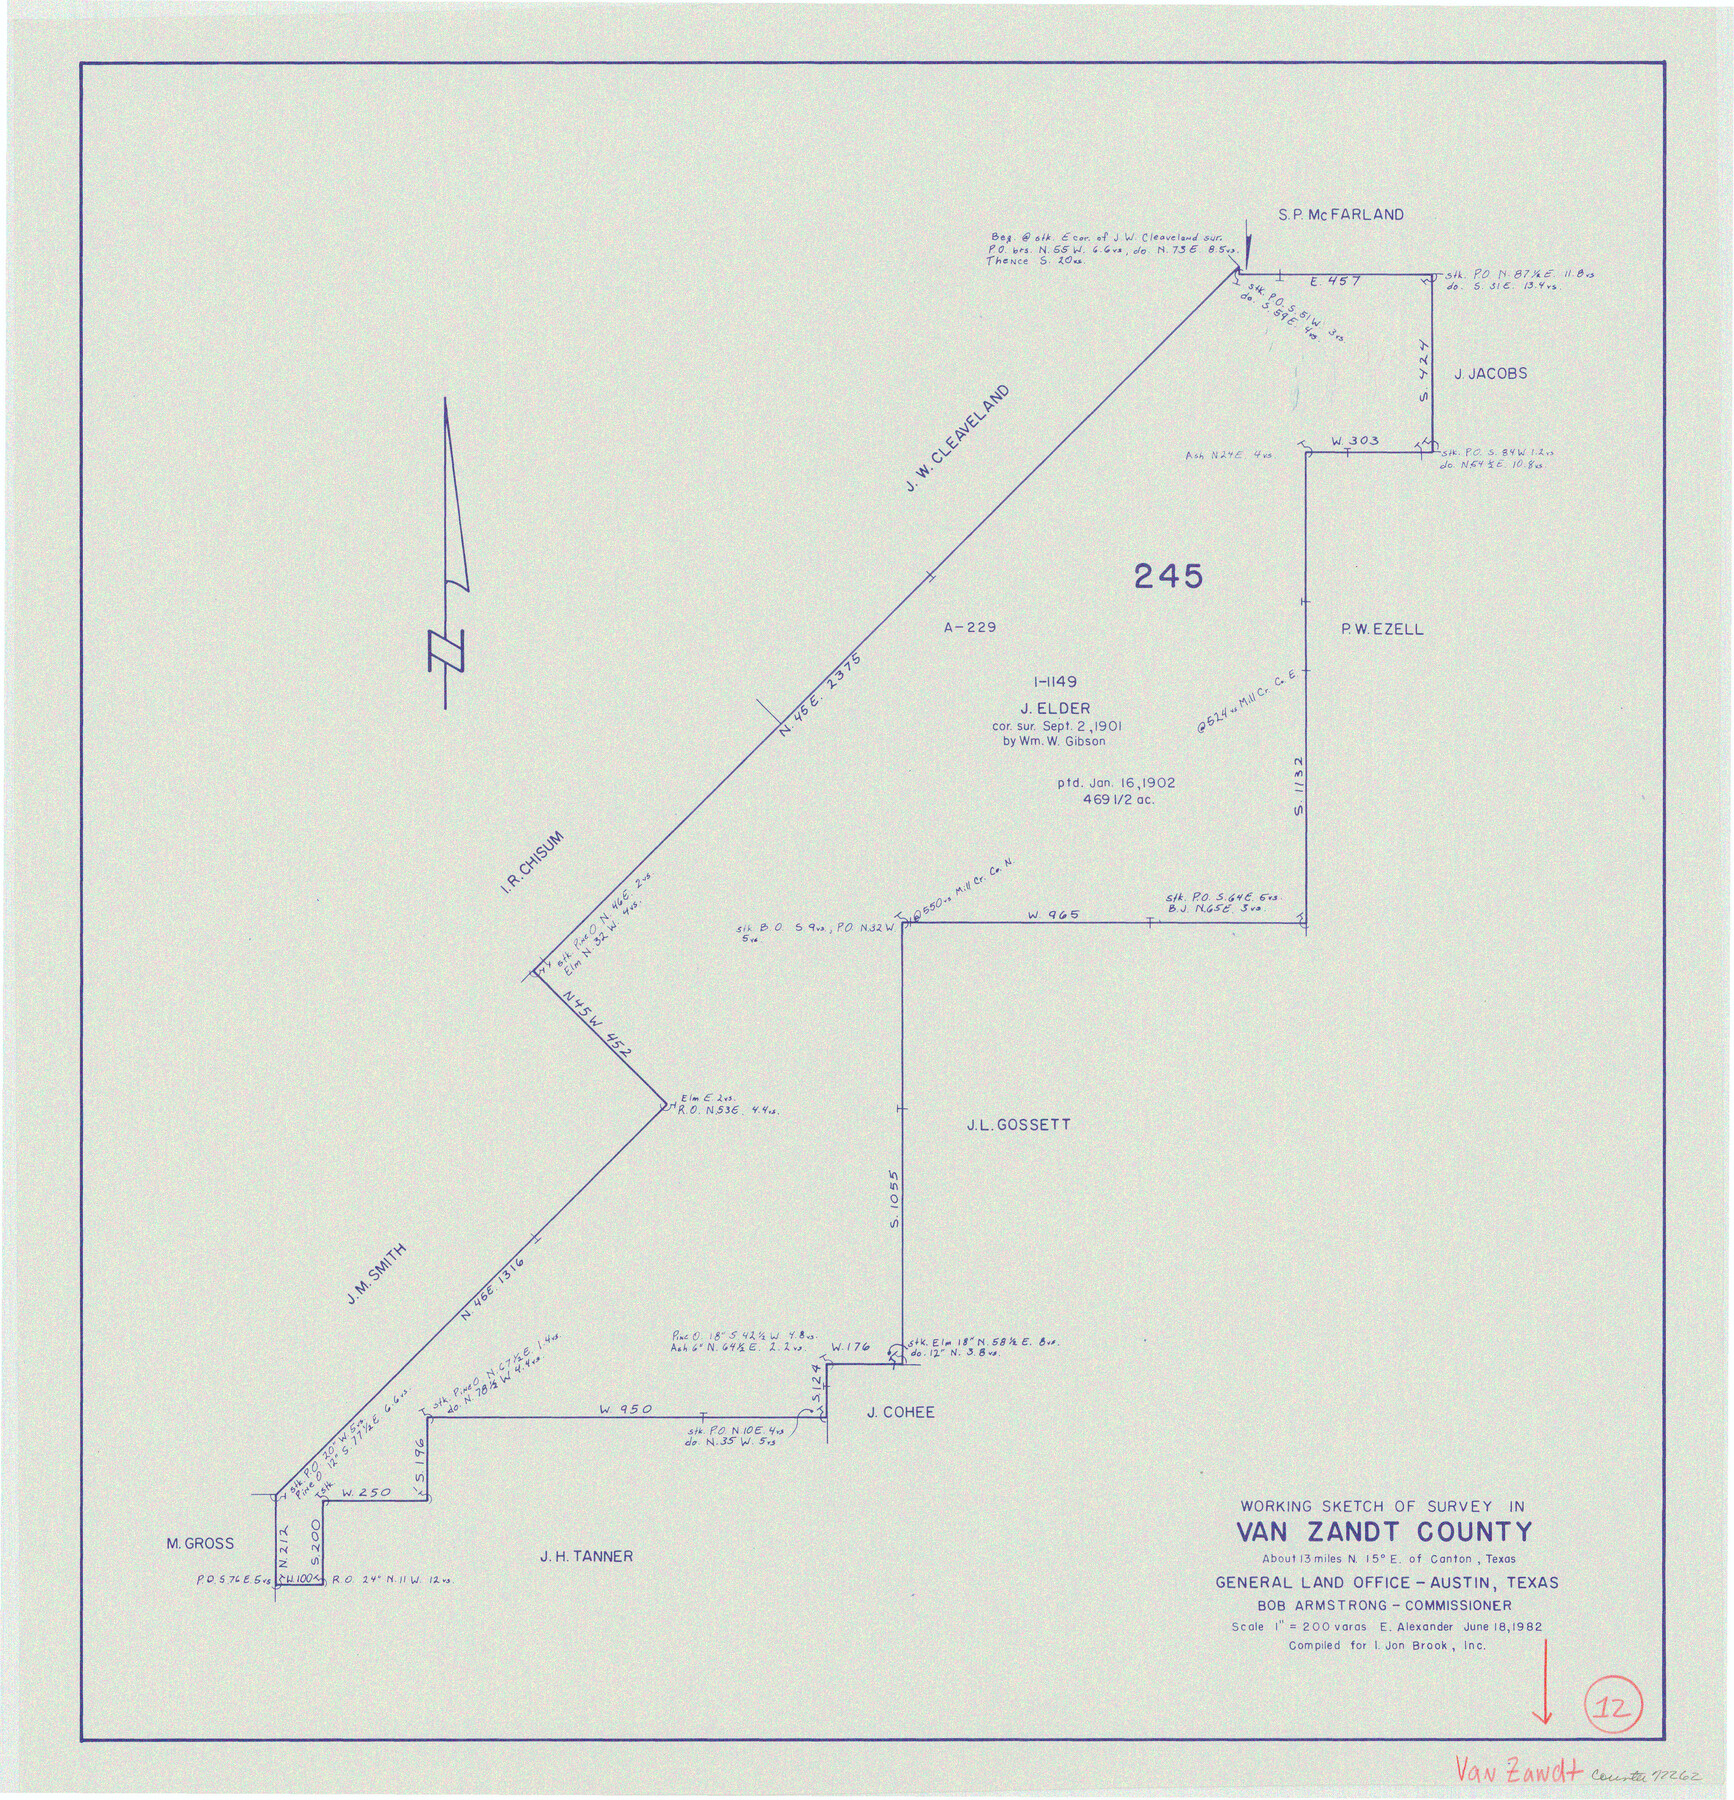 72262, Van Zandt County Working Sketch 12, General Map Collection